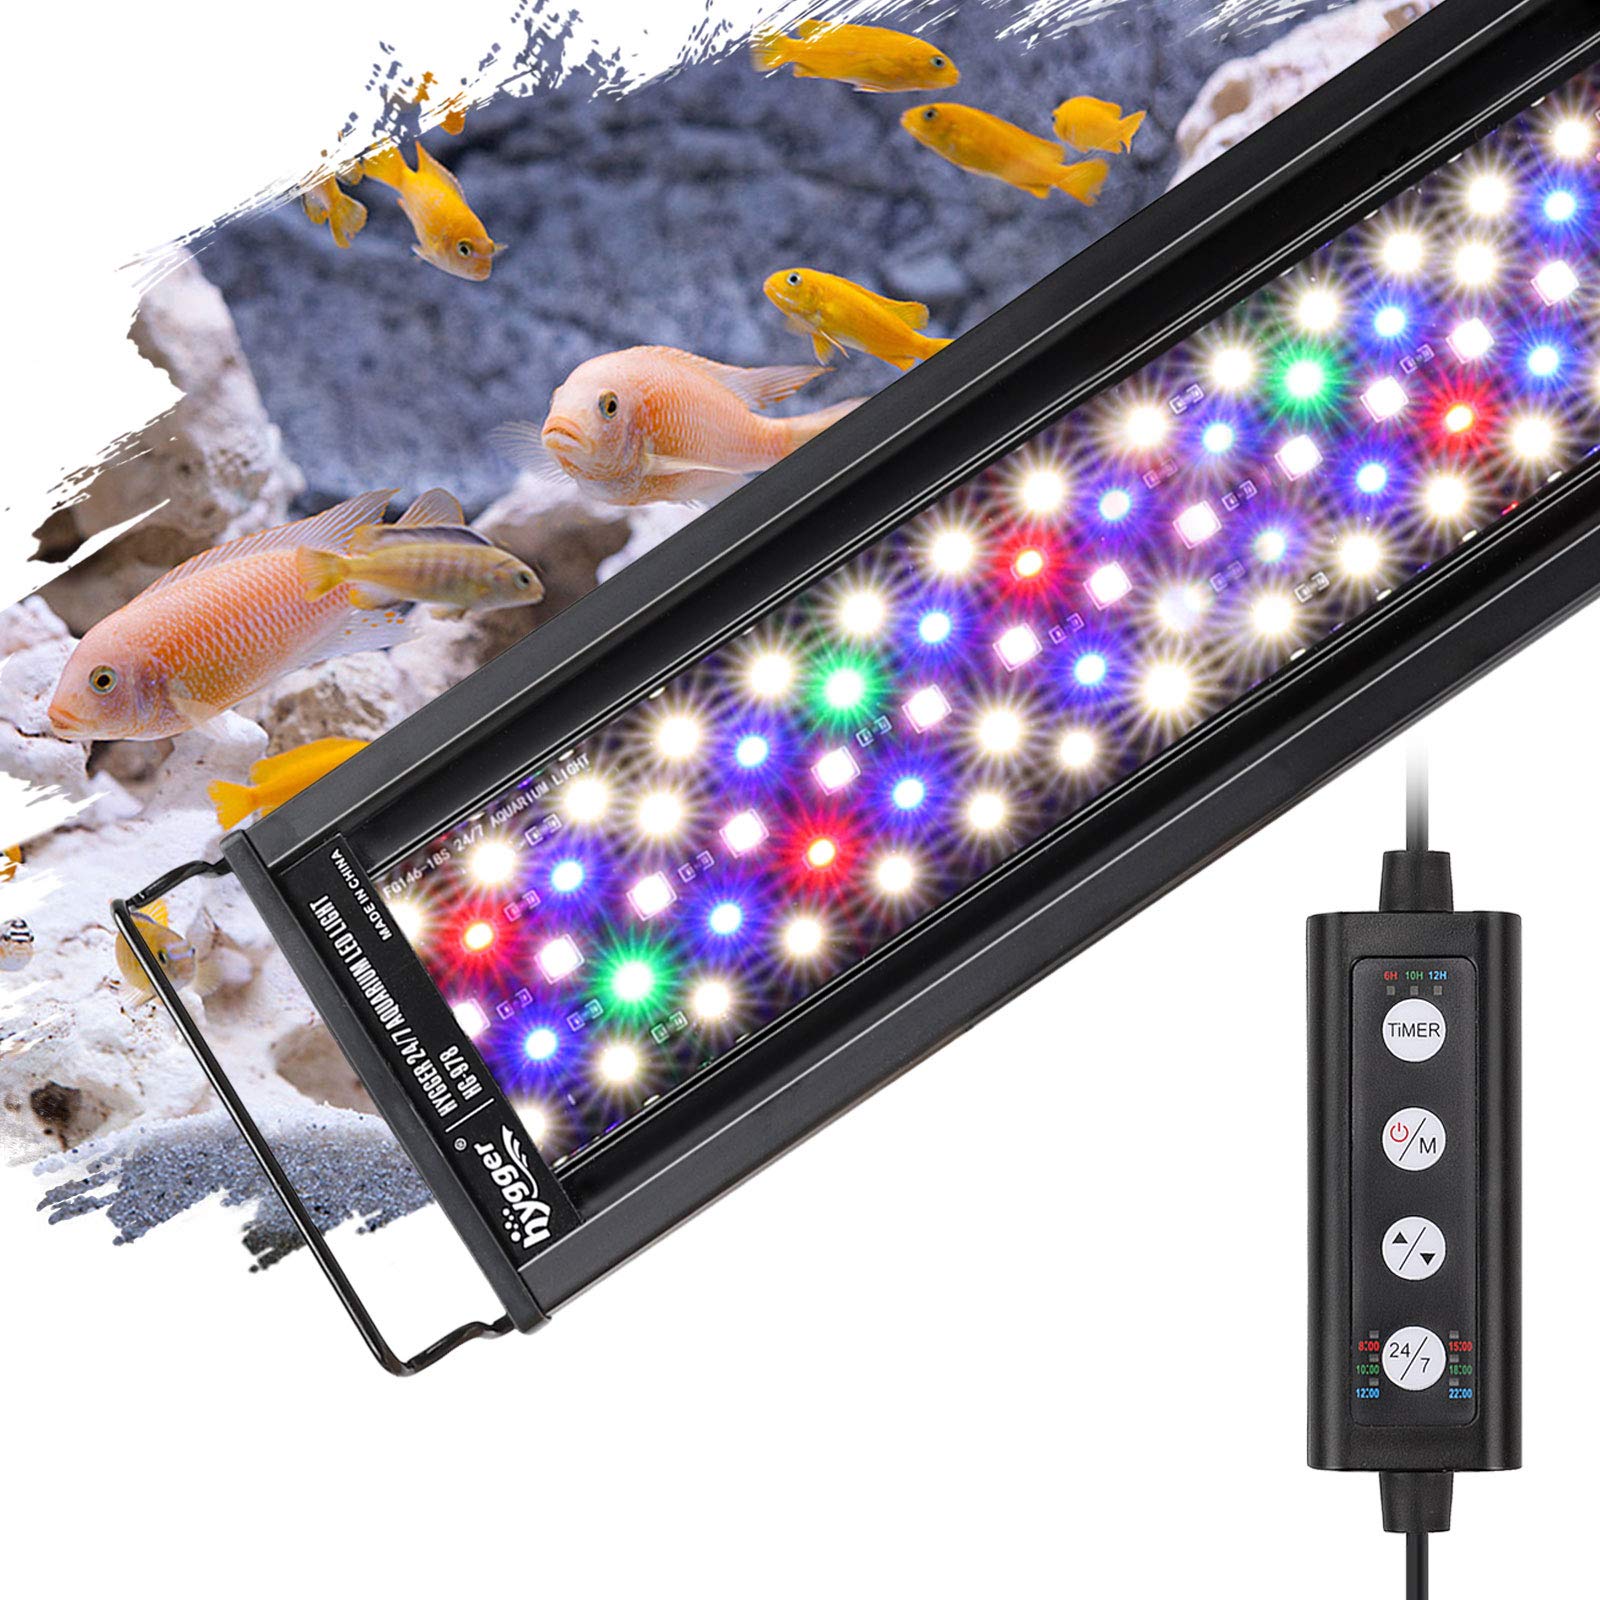 Hygger 26W LED Aquarium Light with Adjustable Timer and Brightness